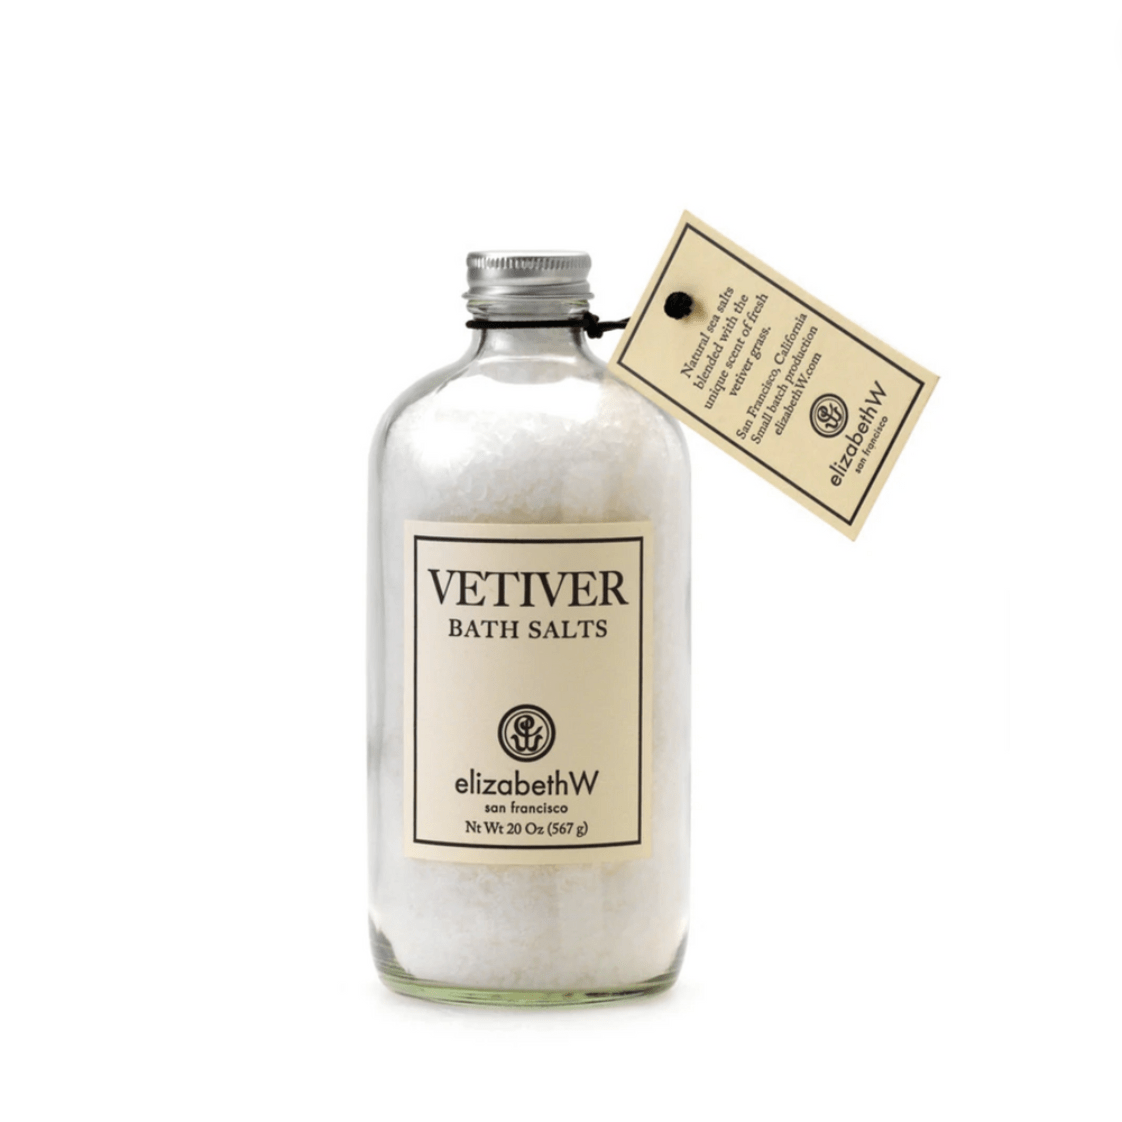 Vetiver Bath Salts in Bottle